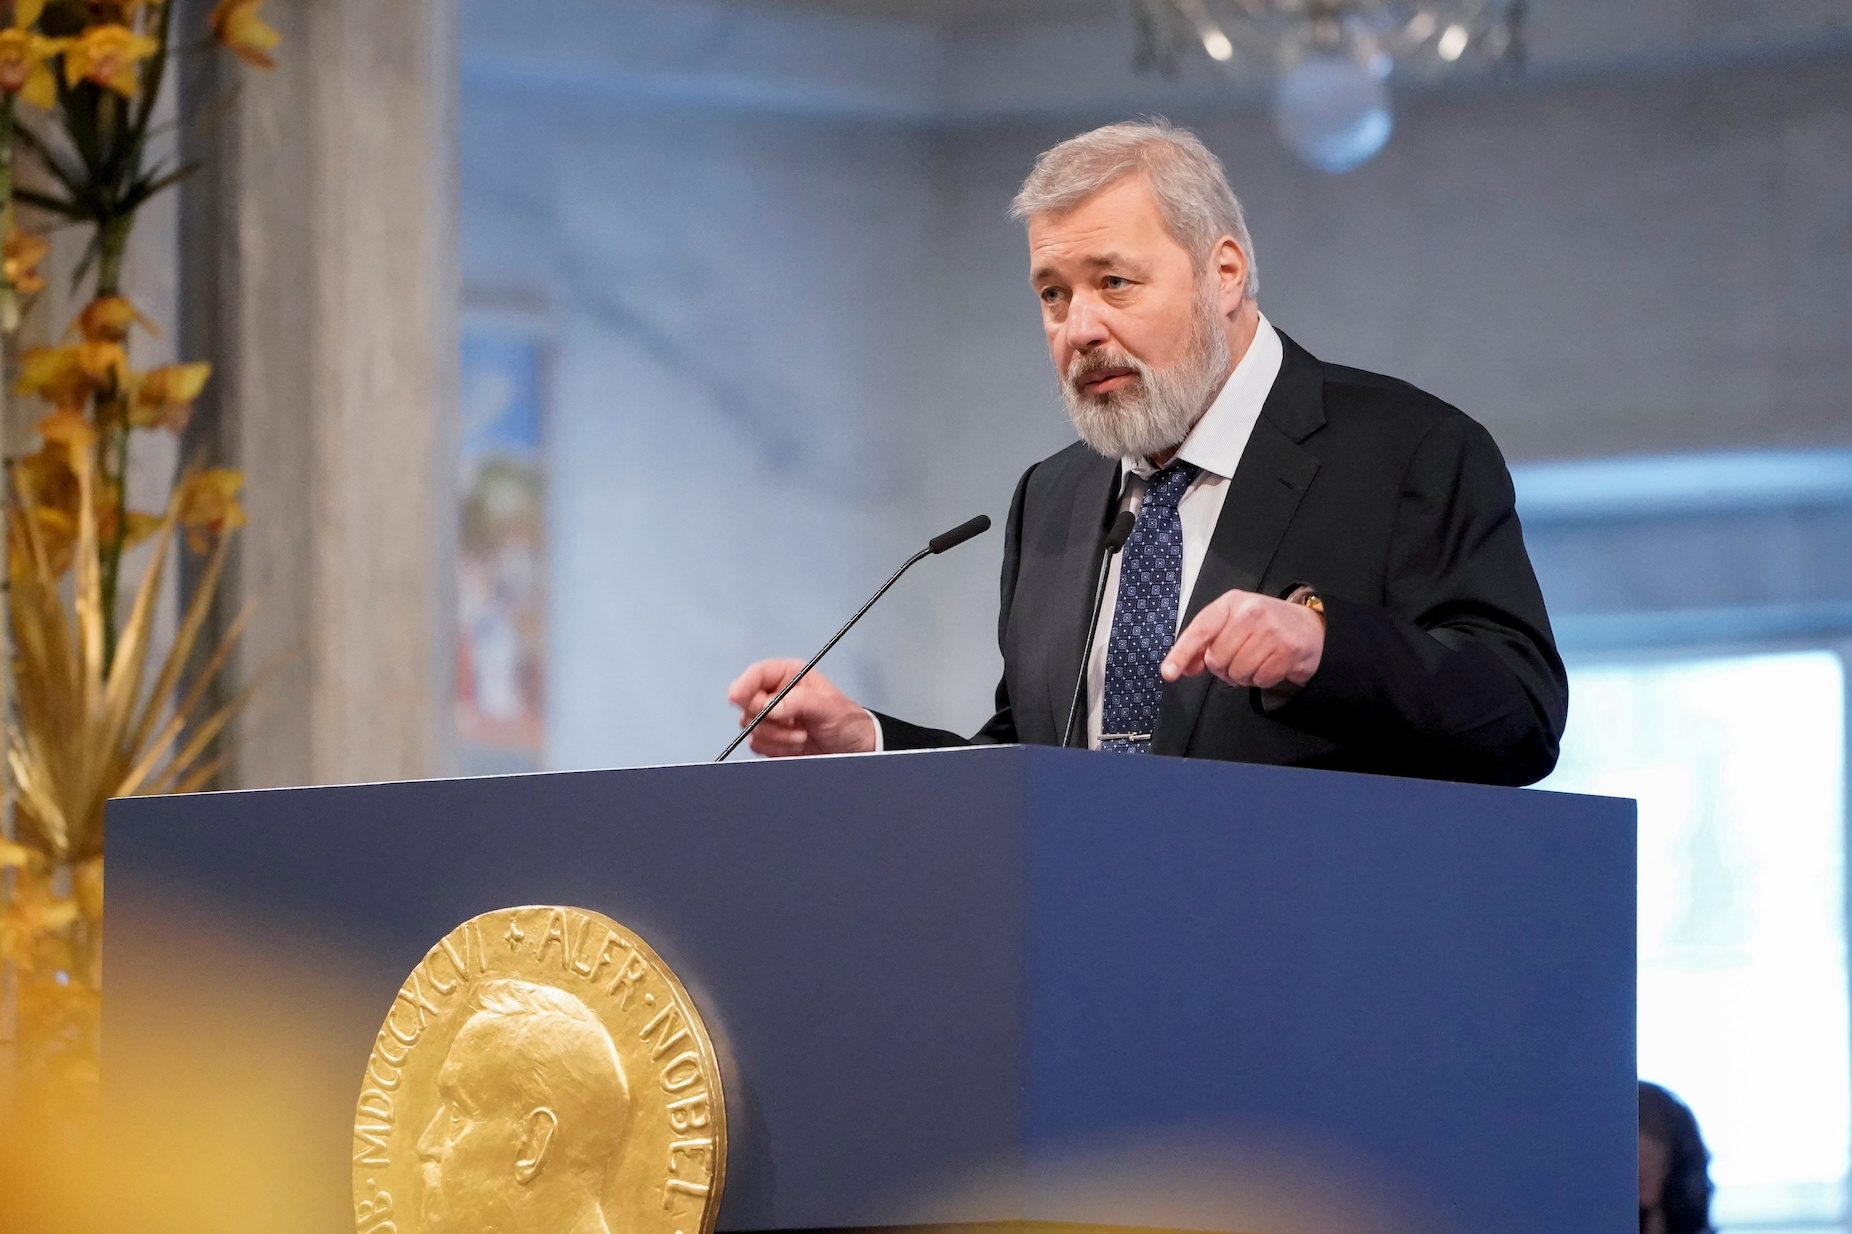 [WATCH] Dmitry Muratov’s Nobel speech: Journalists ‘the antidote against tyranny’